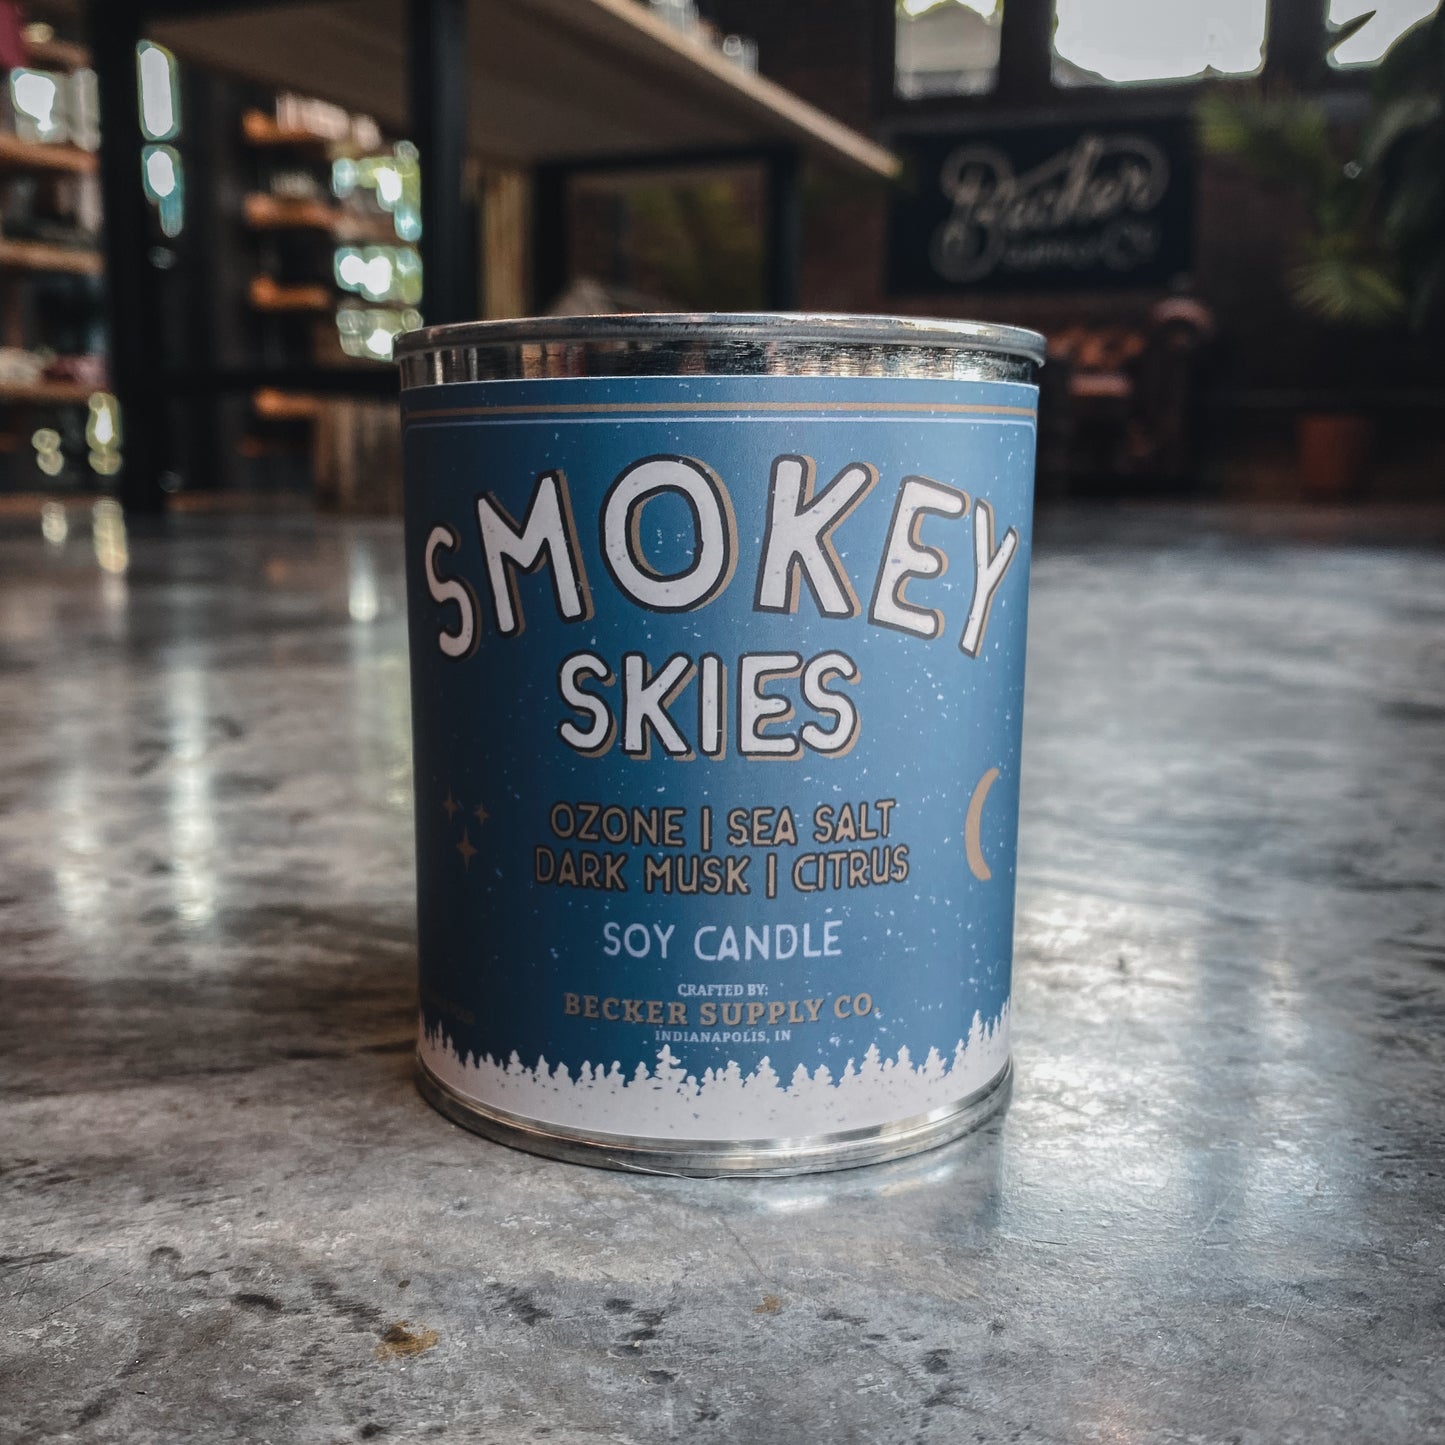 Smokey Skies Candle - 1 Pint